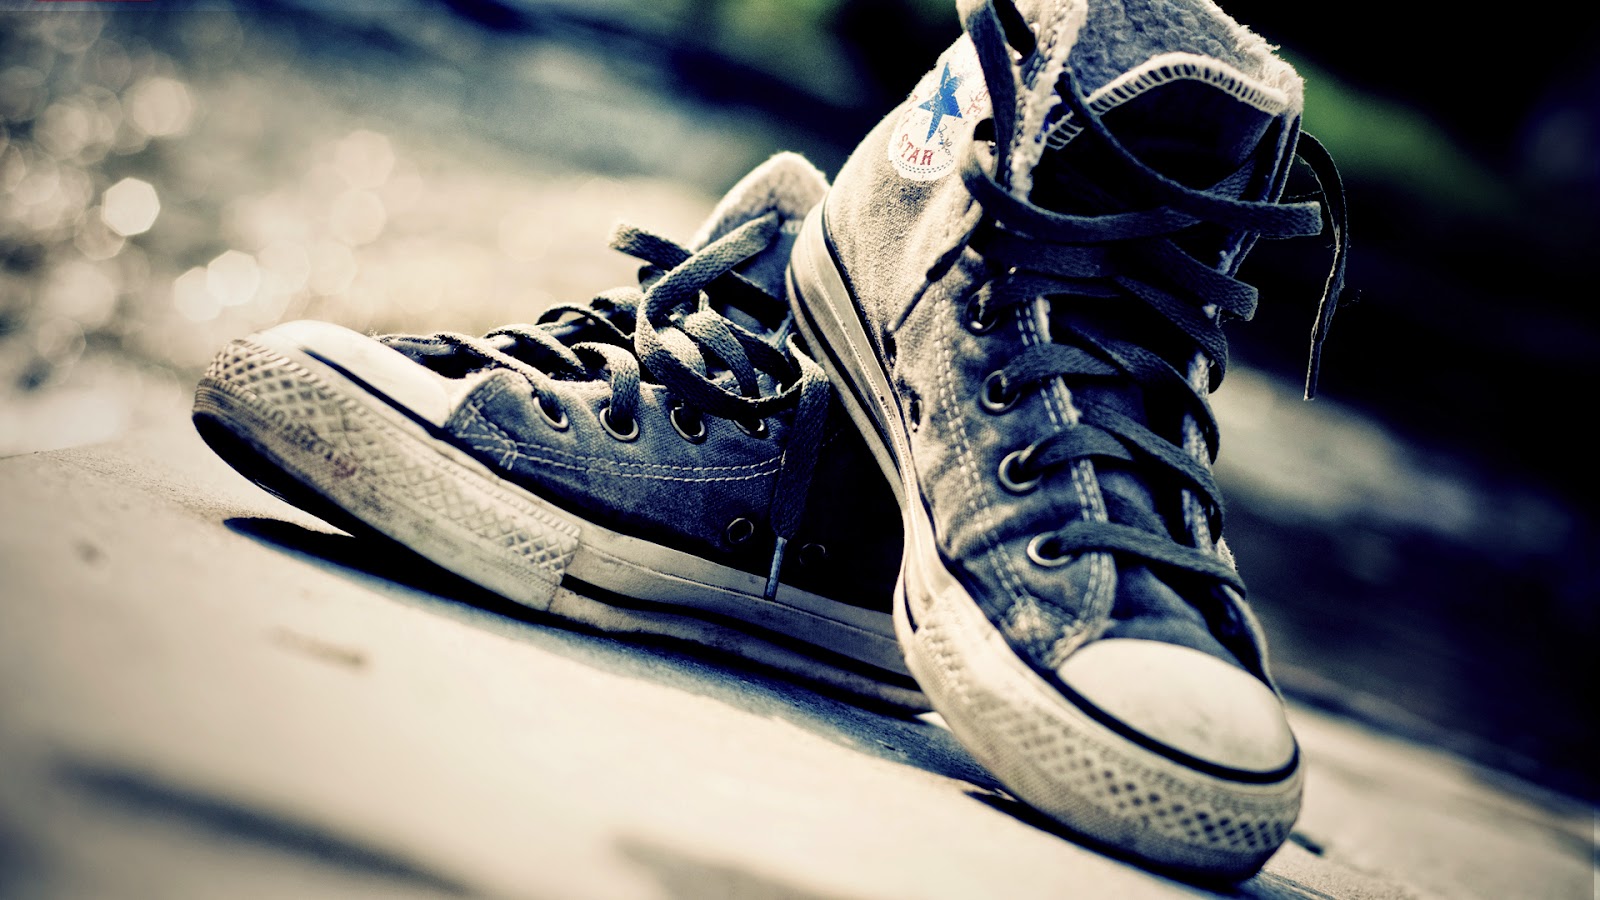 shoes wallpaper hd,shoe,footwear,sneakers,white,photograph